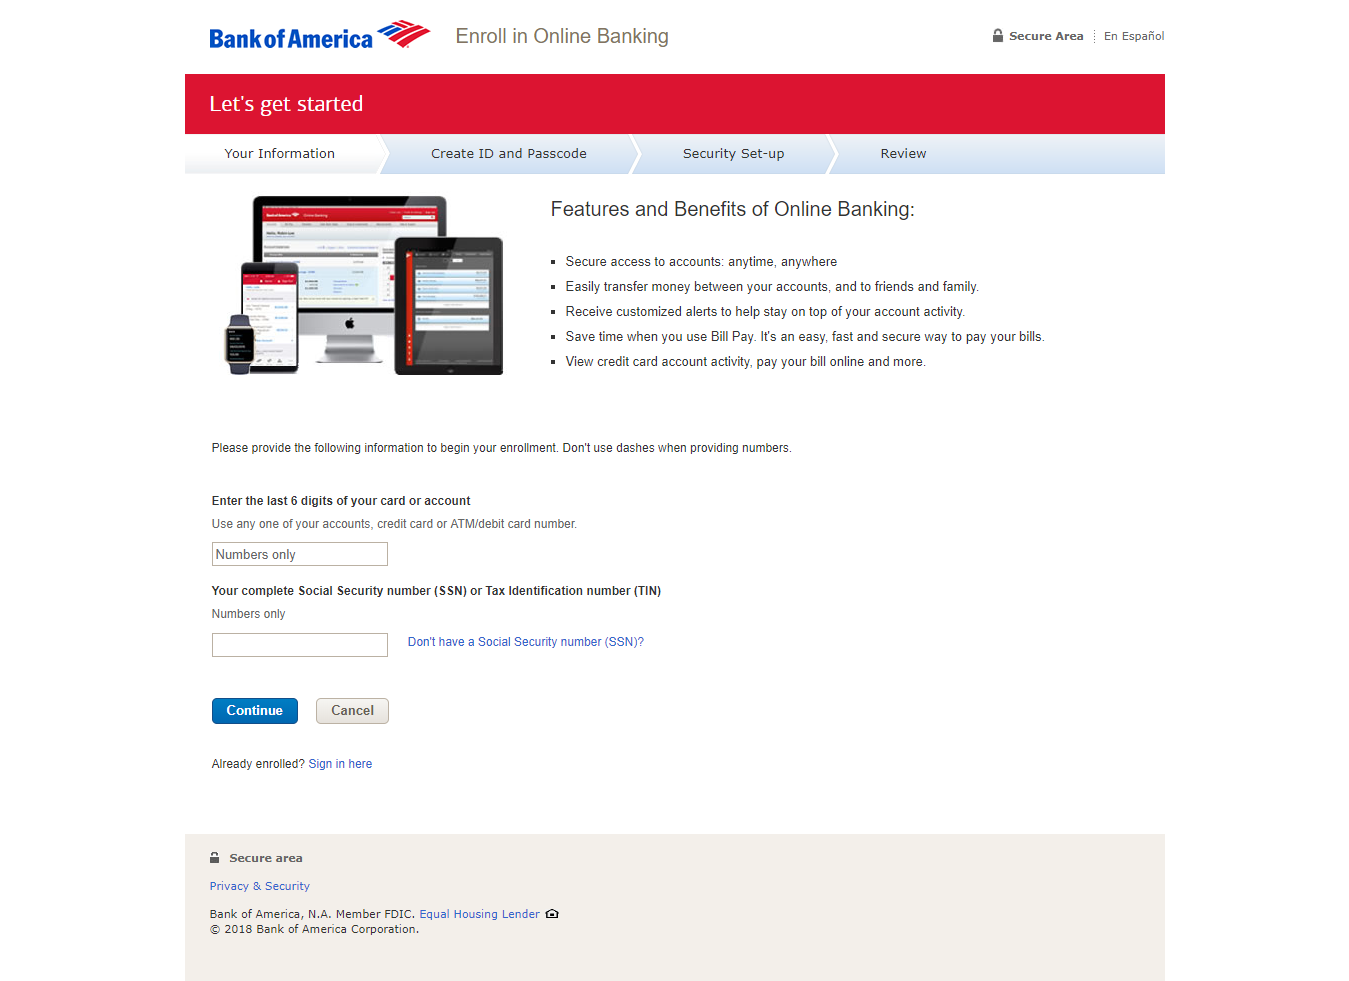 Bank of America Online Banking Enrollment